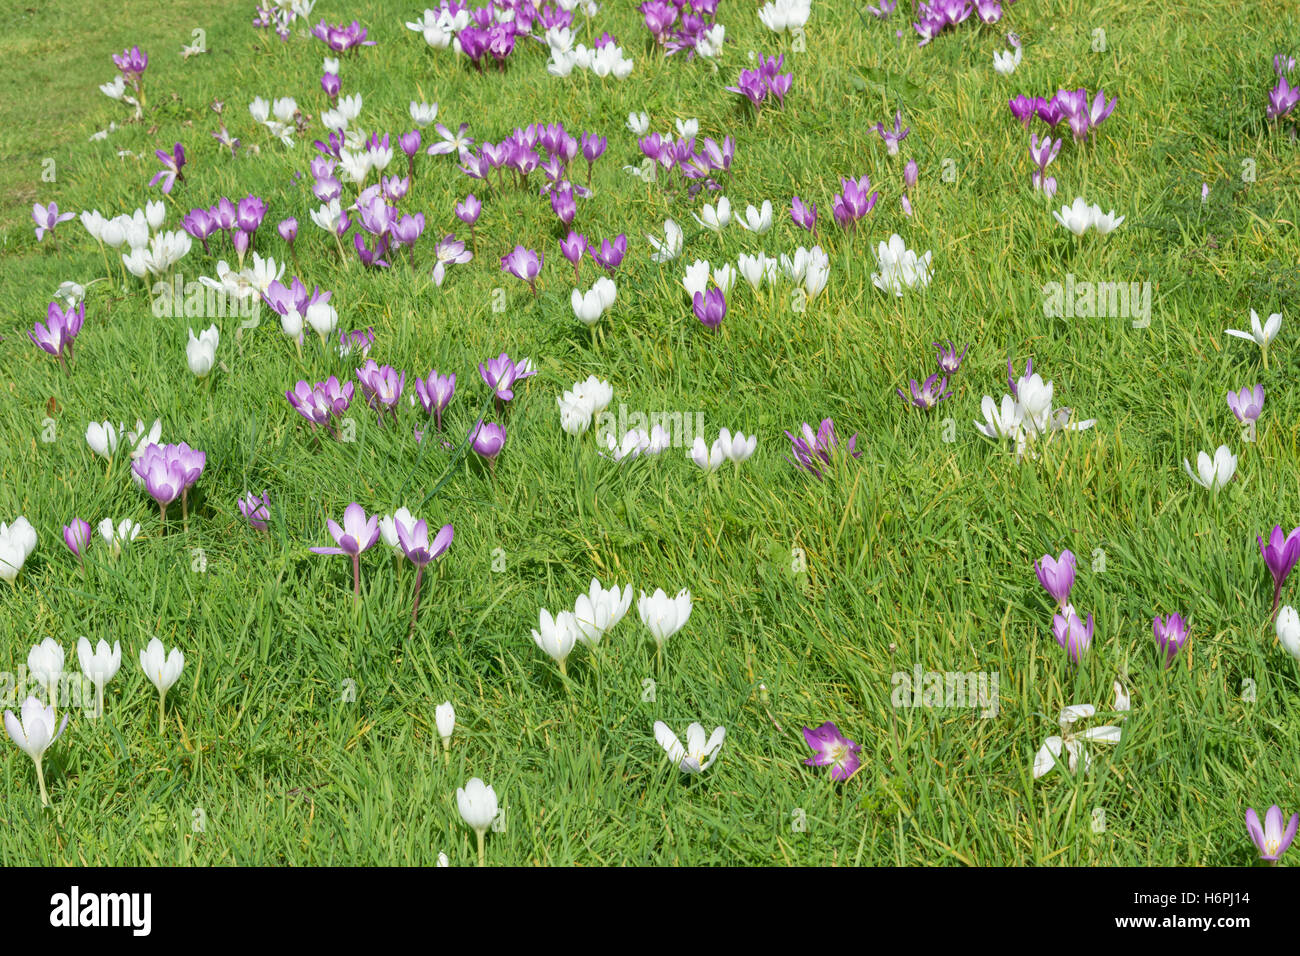 Colchicum or Autumn crocus growing in grass Stock Photo